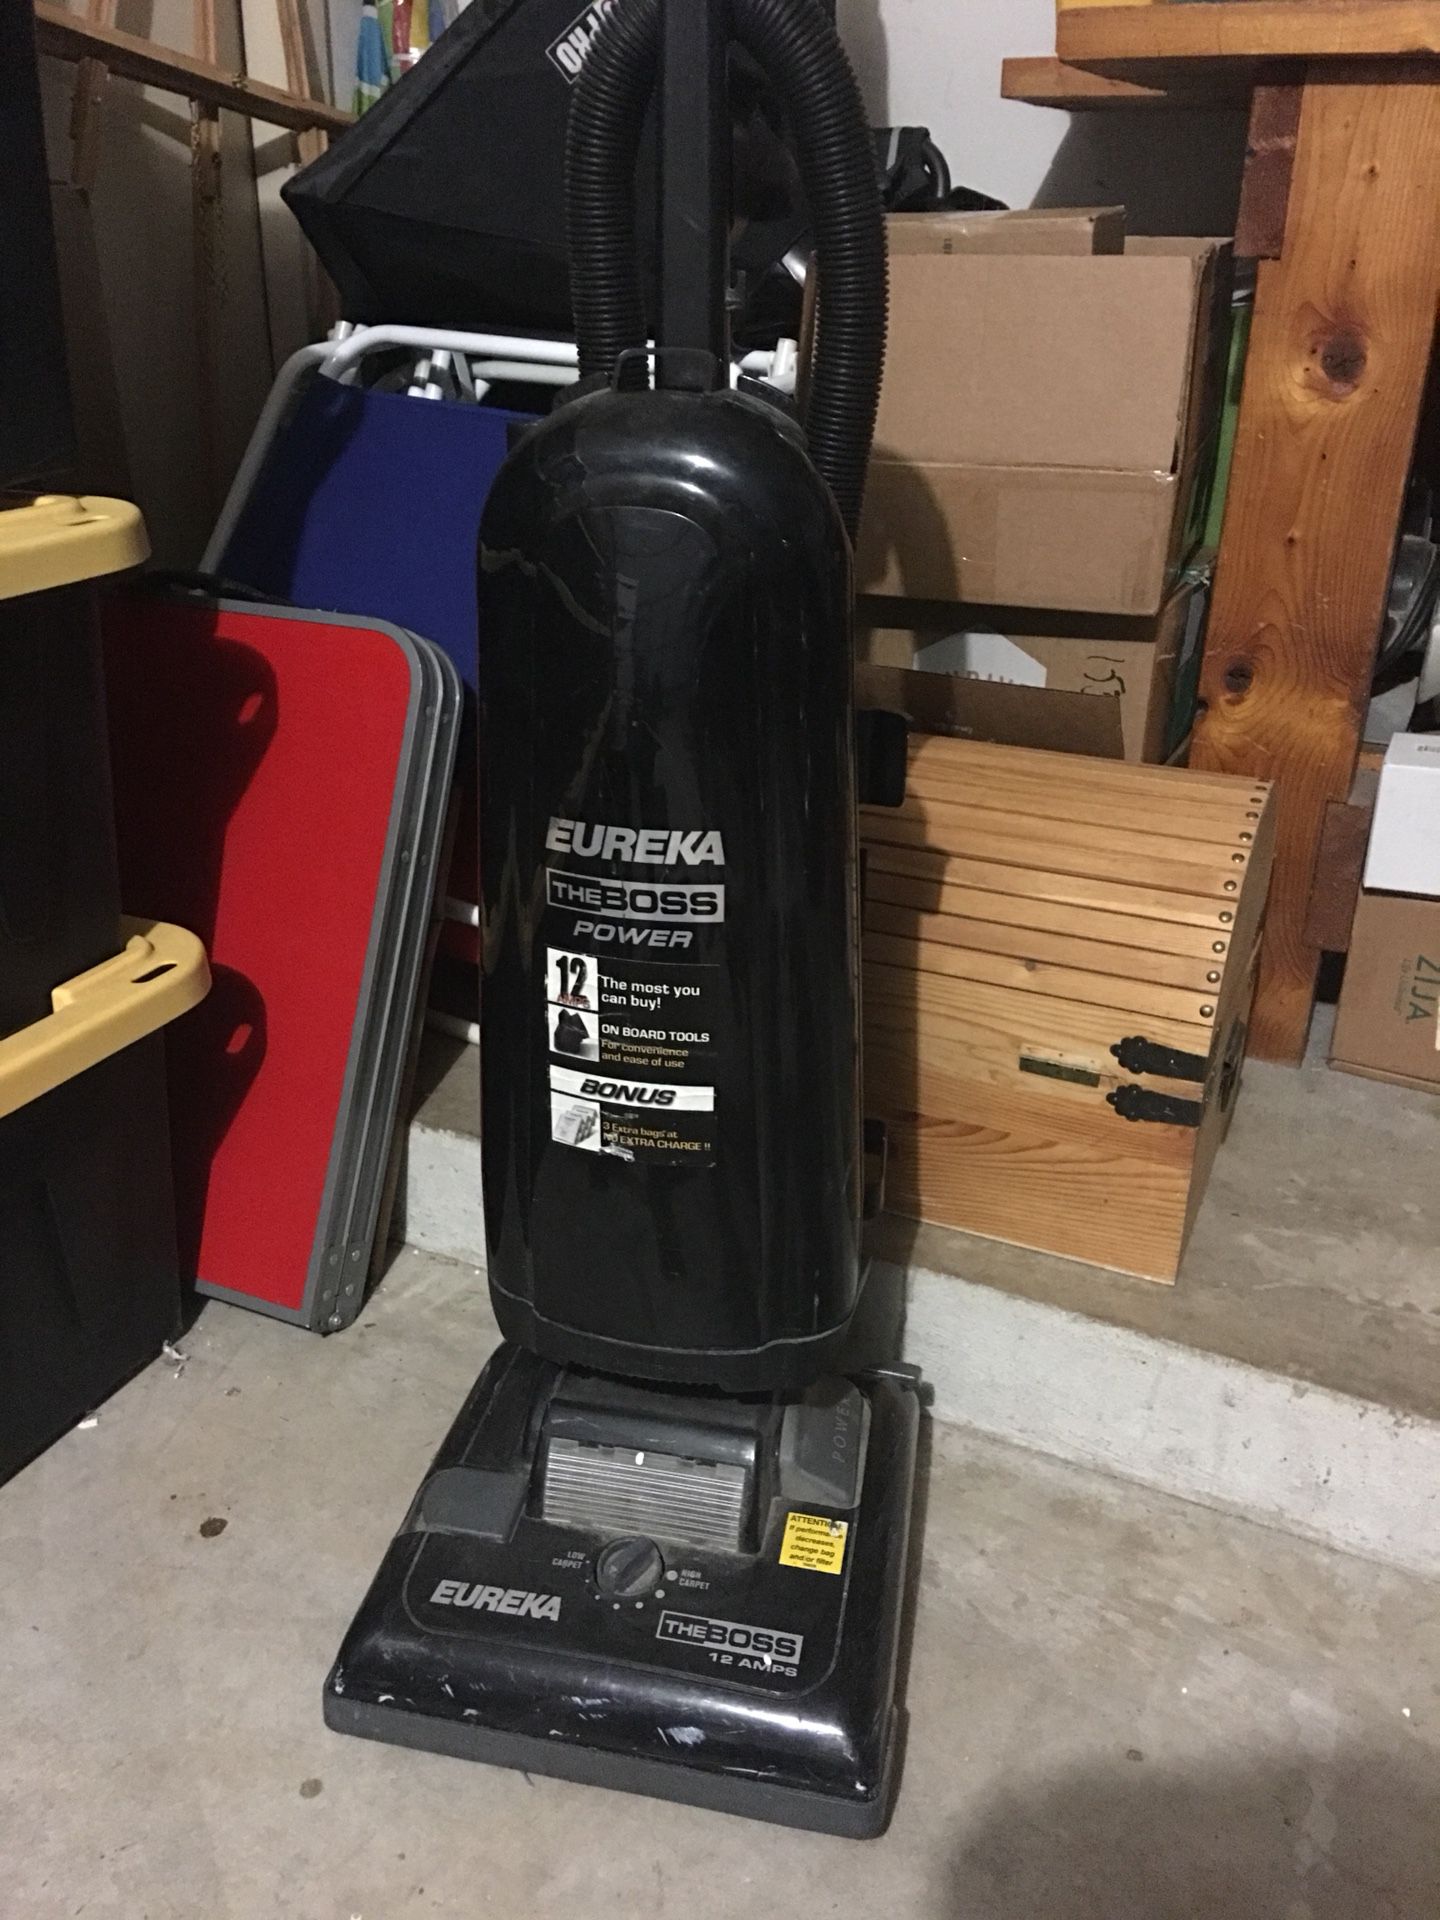 Eureka the boss vacuum. Excellent condition. Black. Powerful 12 AMPS.